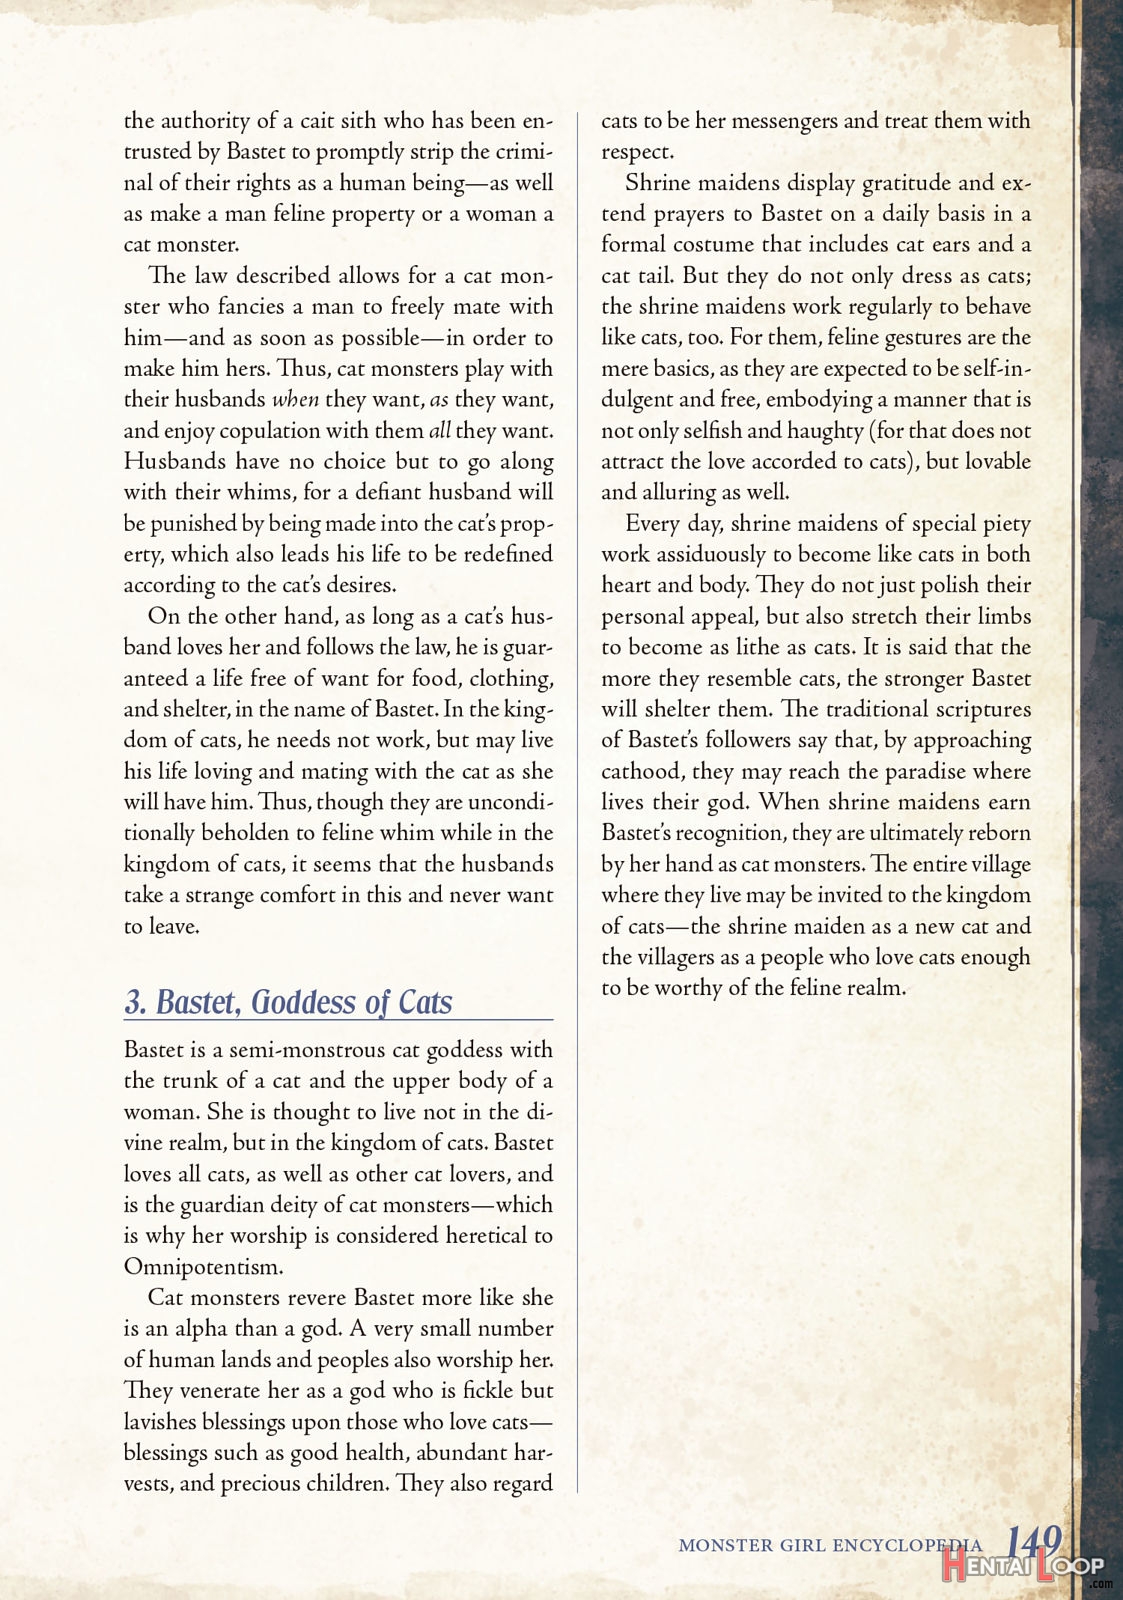 Monster Girl Encyclopedia Vol. 2 page 150